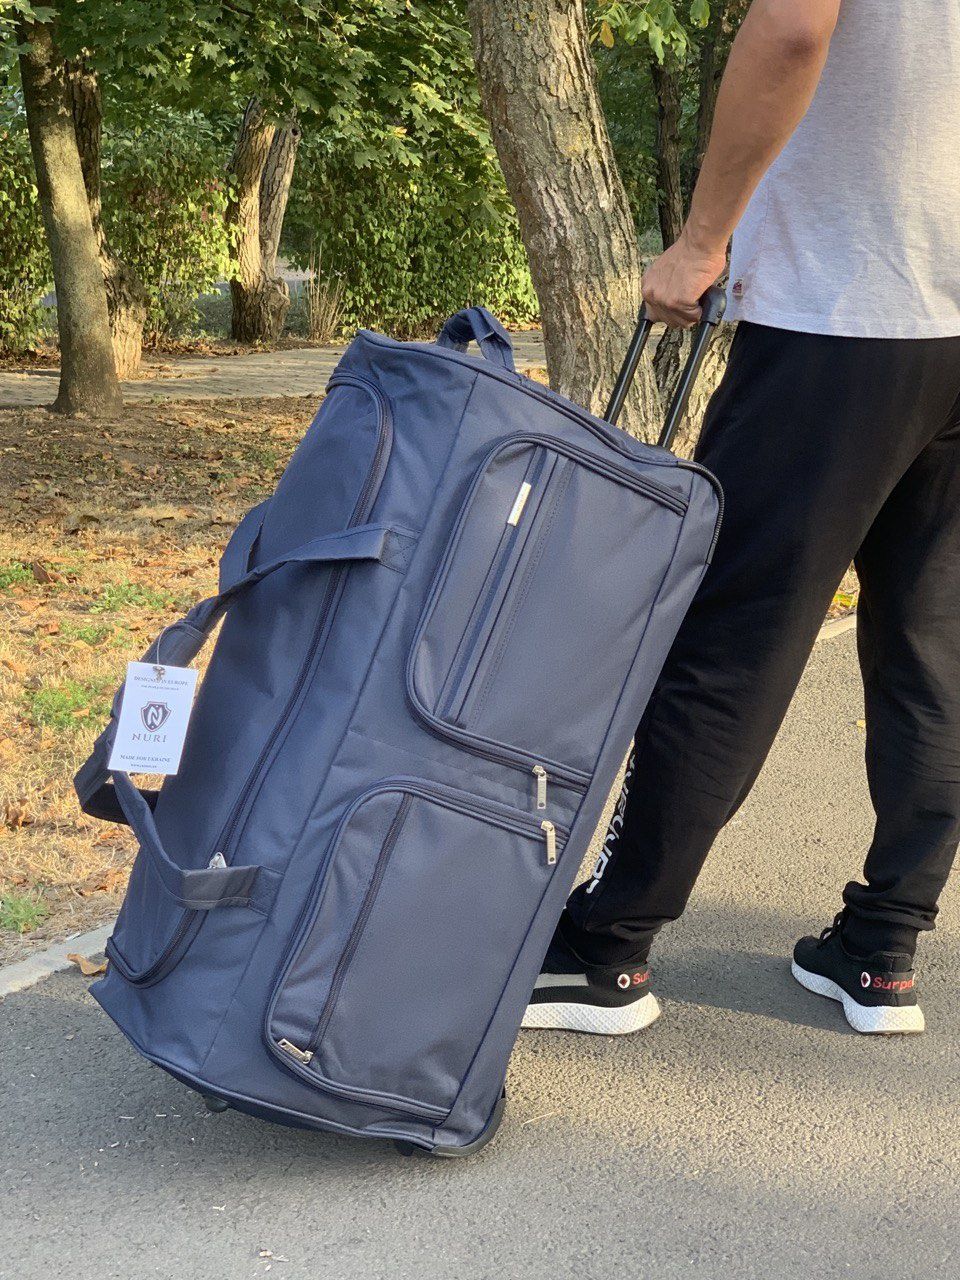 Чемодан- сумка на колесах сумка чемодан большая 110 литров Акция!